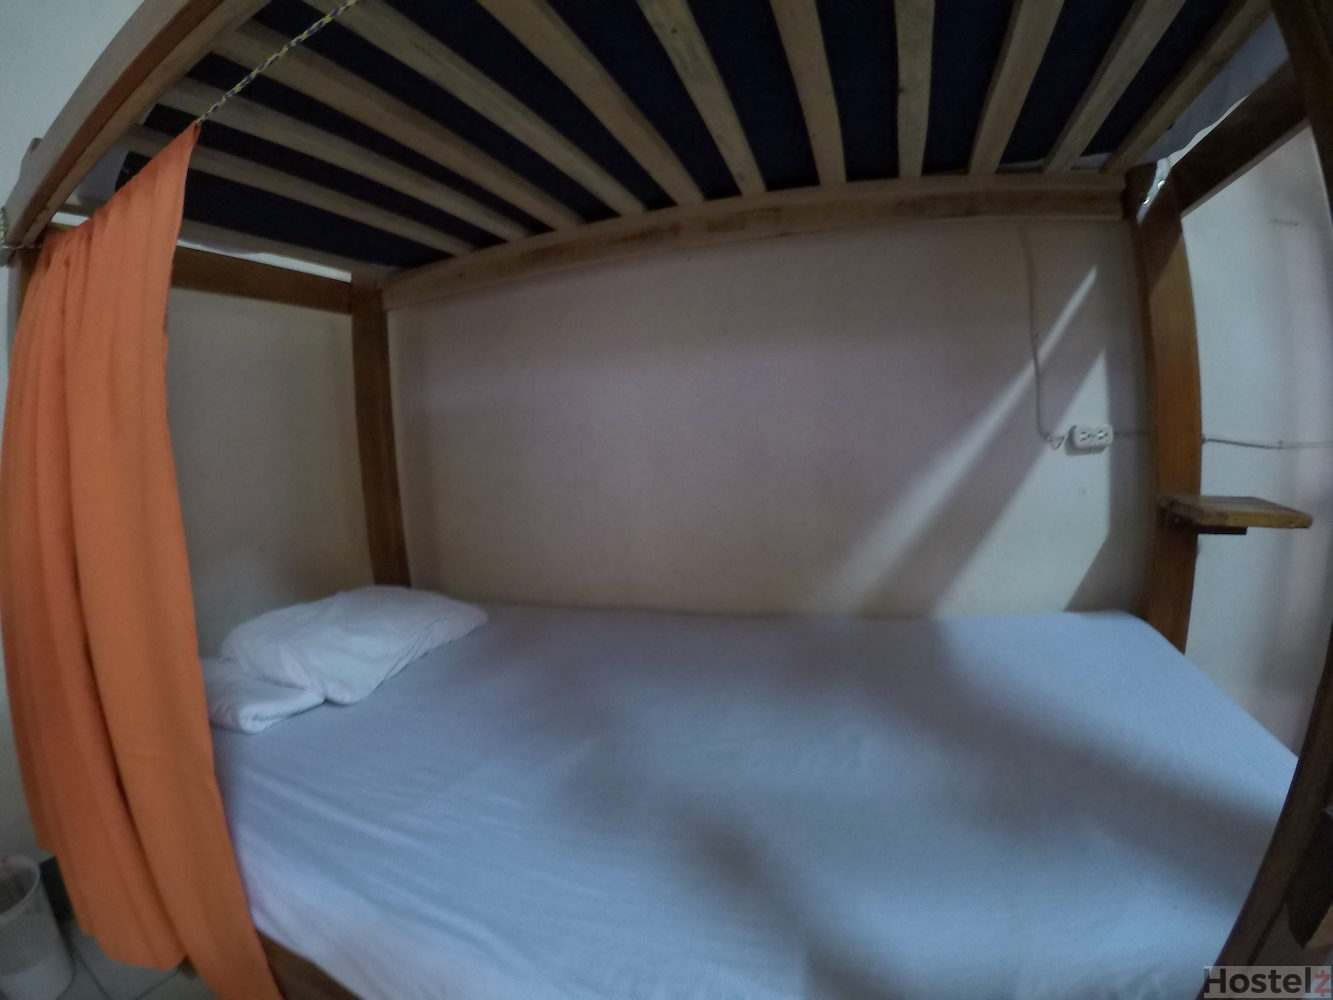 Lower bunk in 8-bed dorm